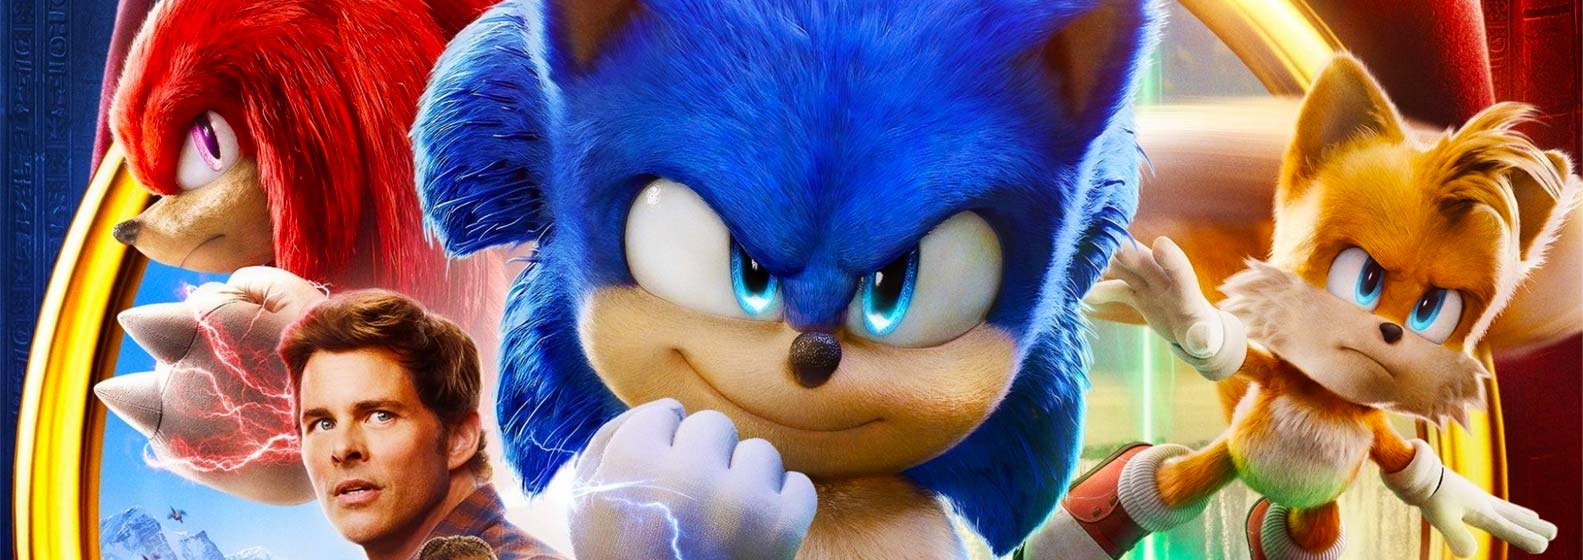 Sonic 2 Le Film - Header Image